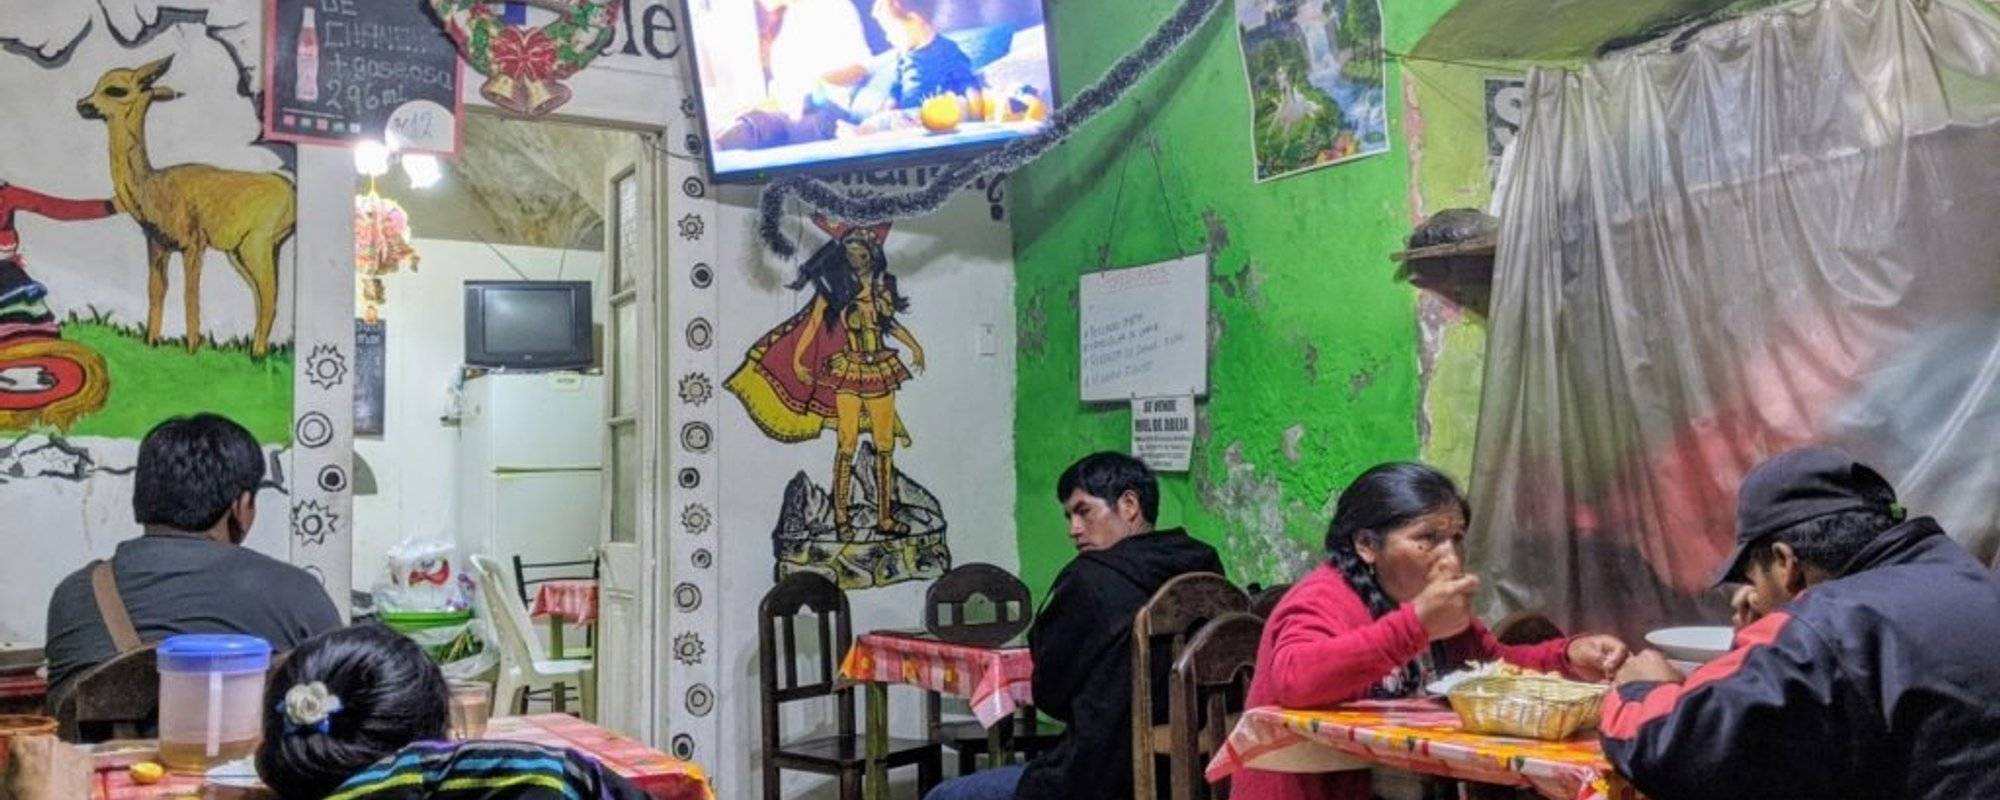 $1.5 Peruvian food set at Huarique in Arequipa, Peru 😮🇵🇪
